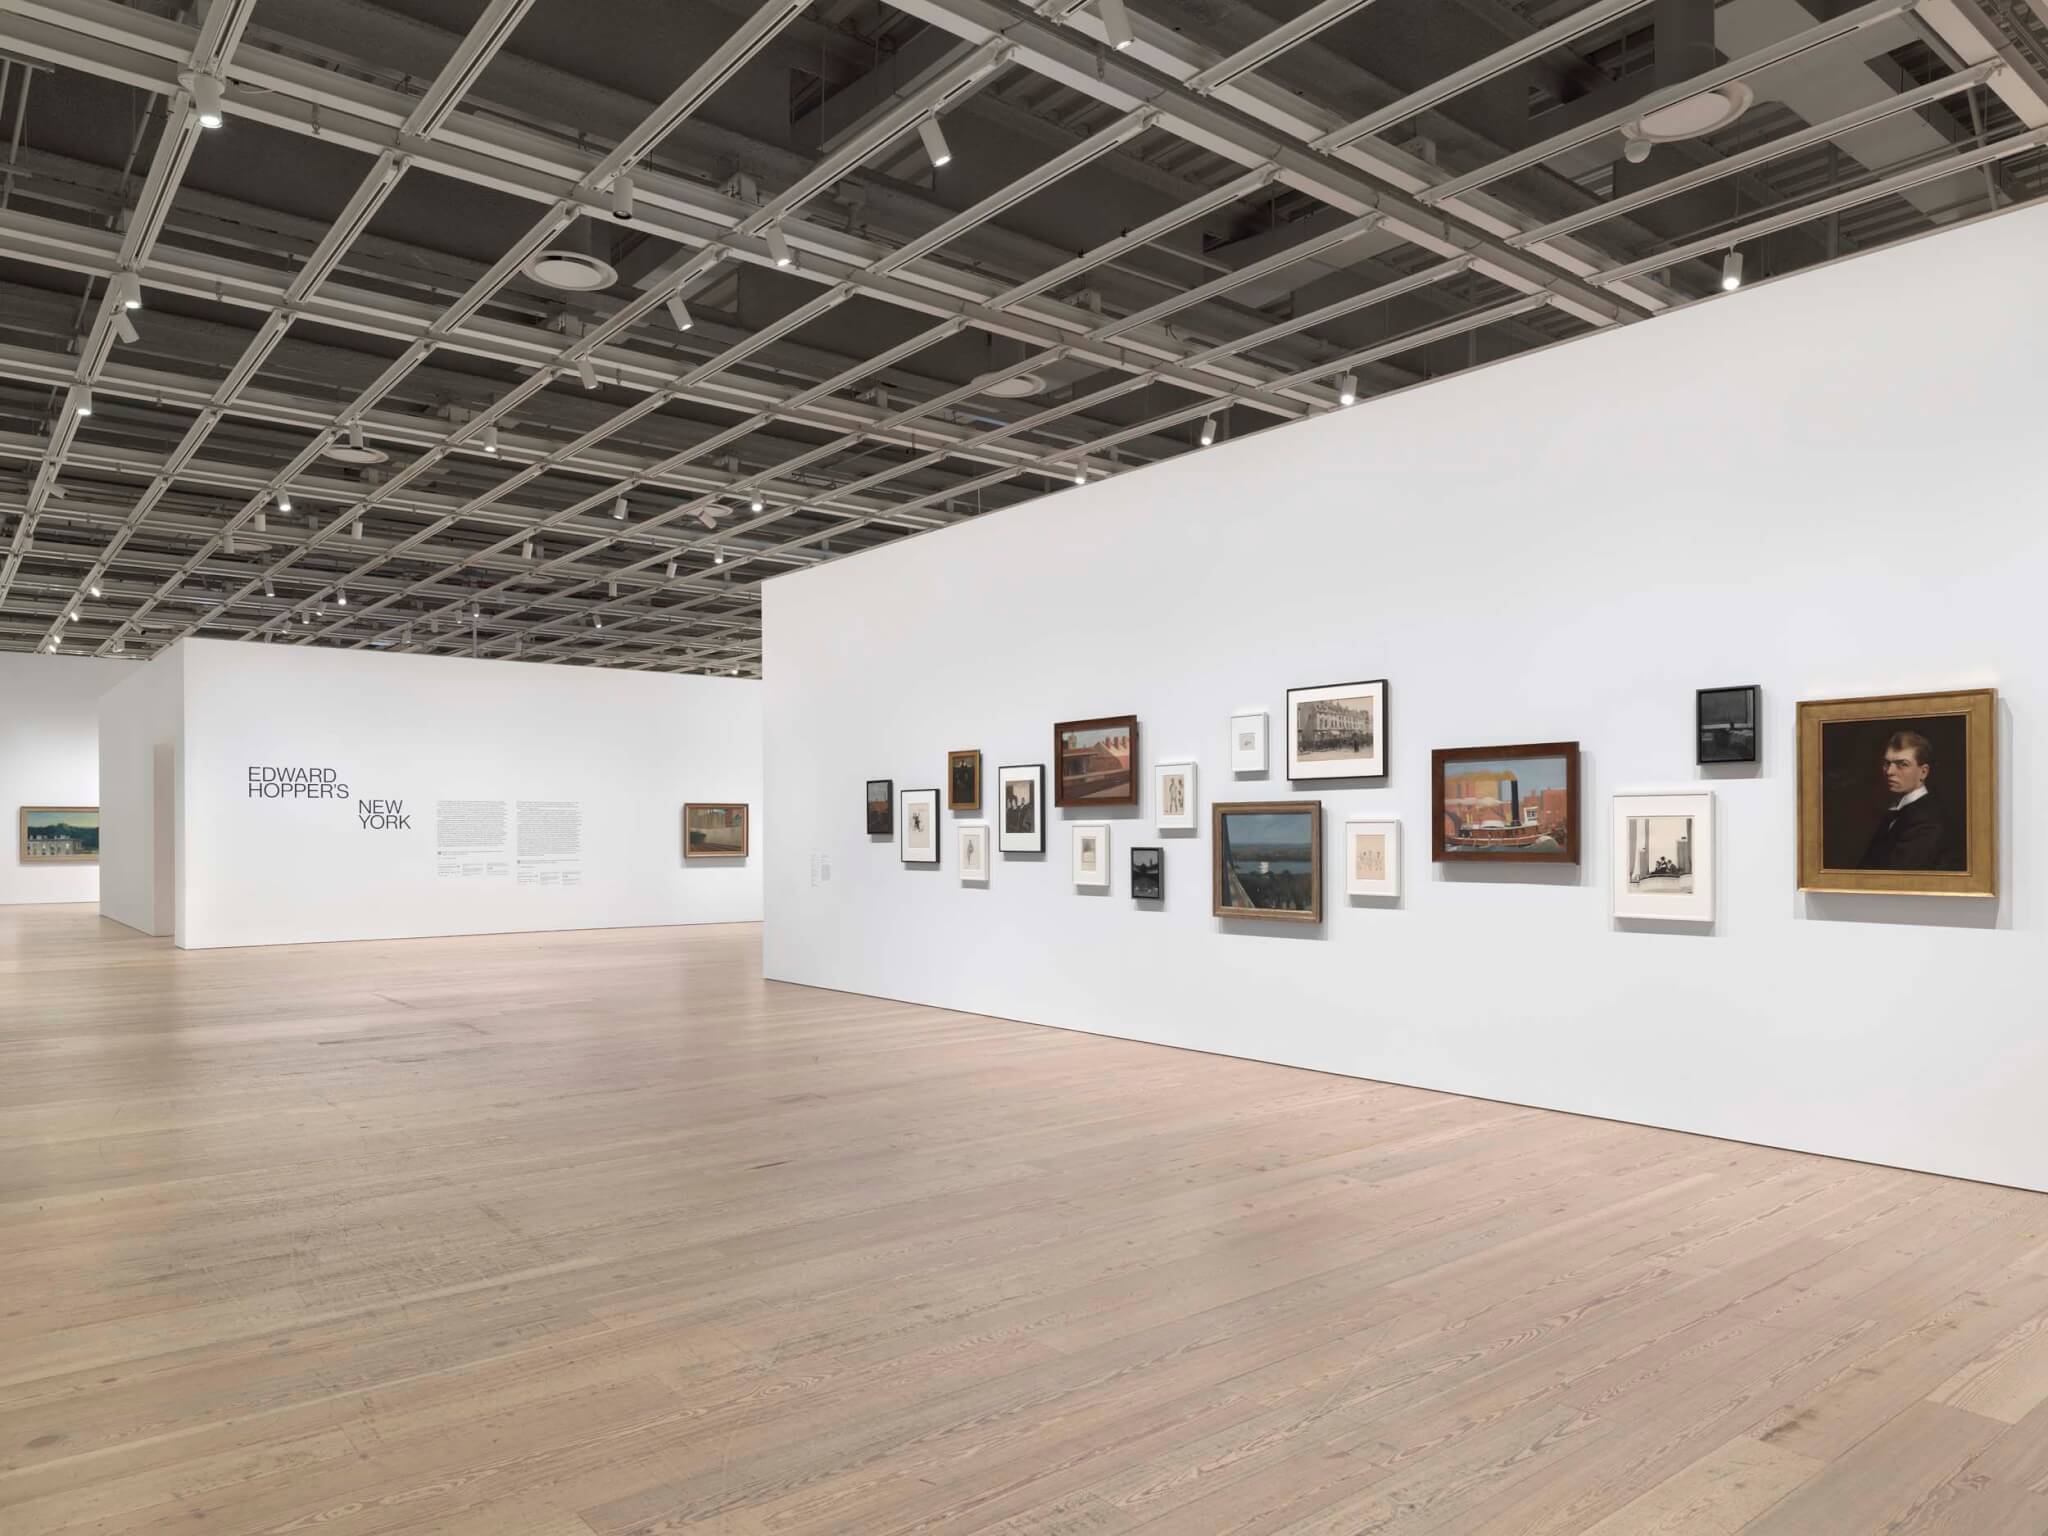 Edward Hopper’s New York installation view